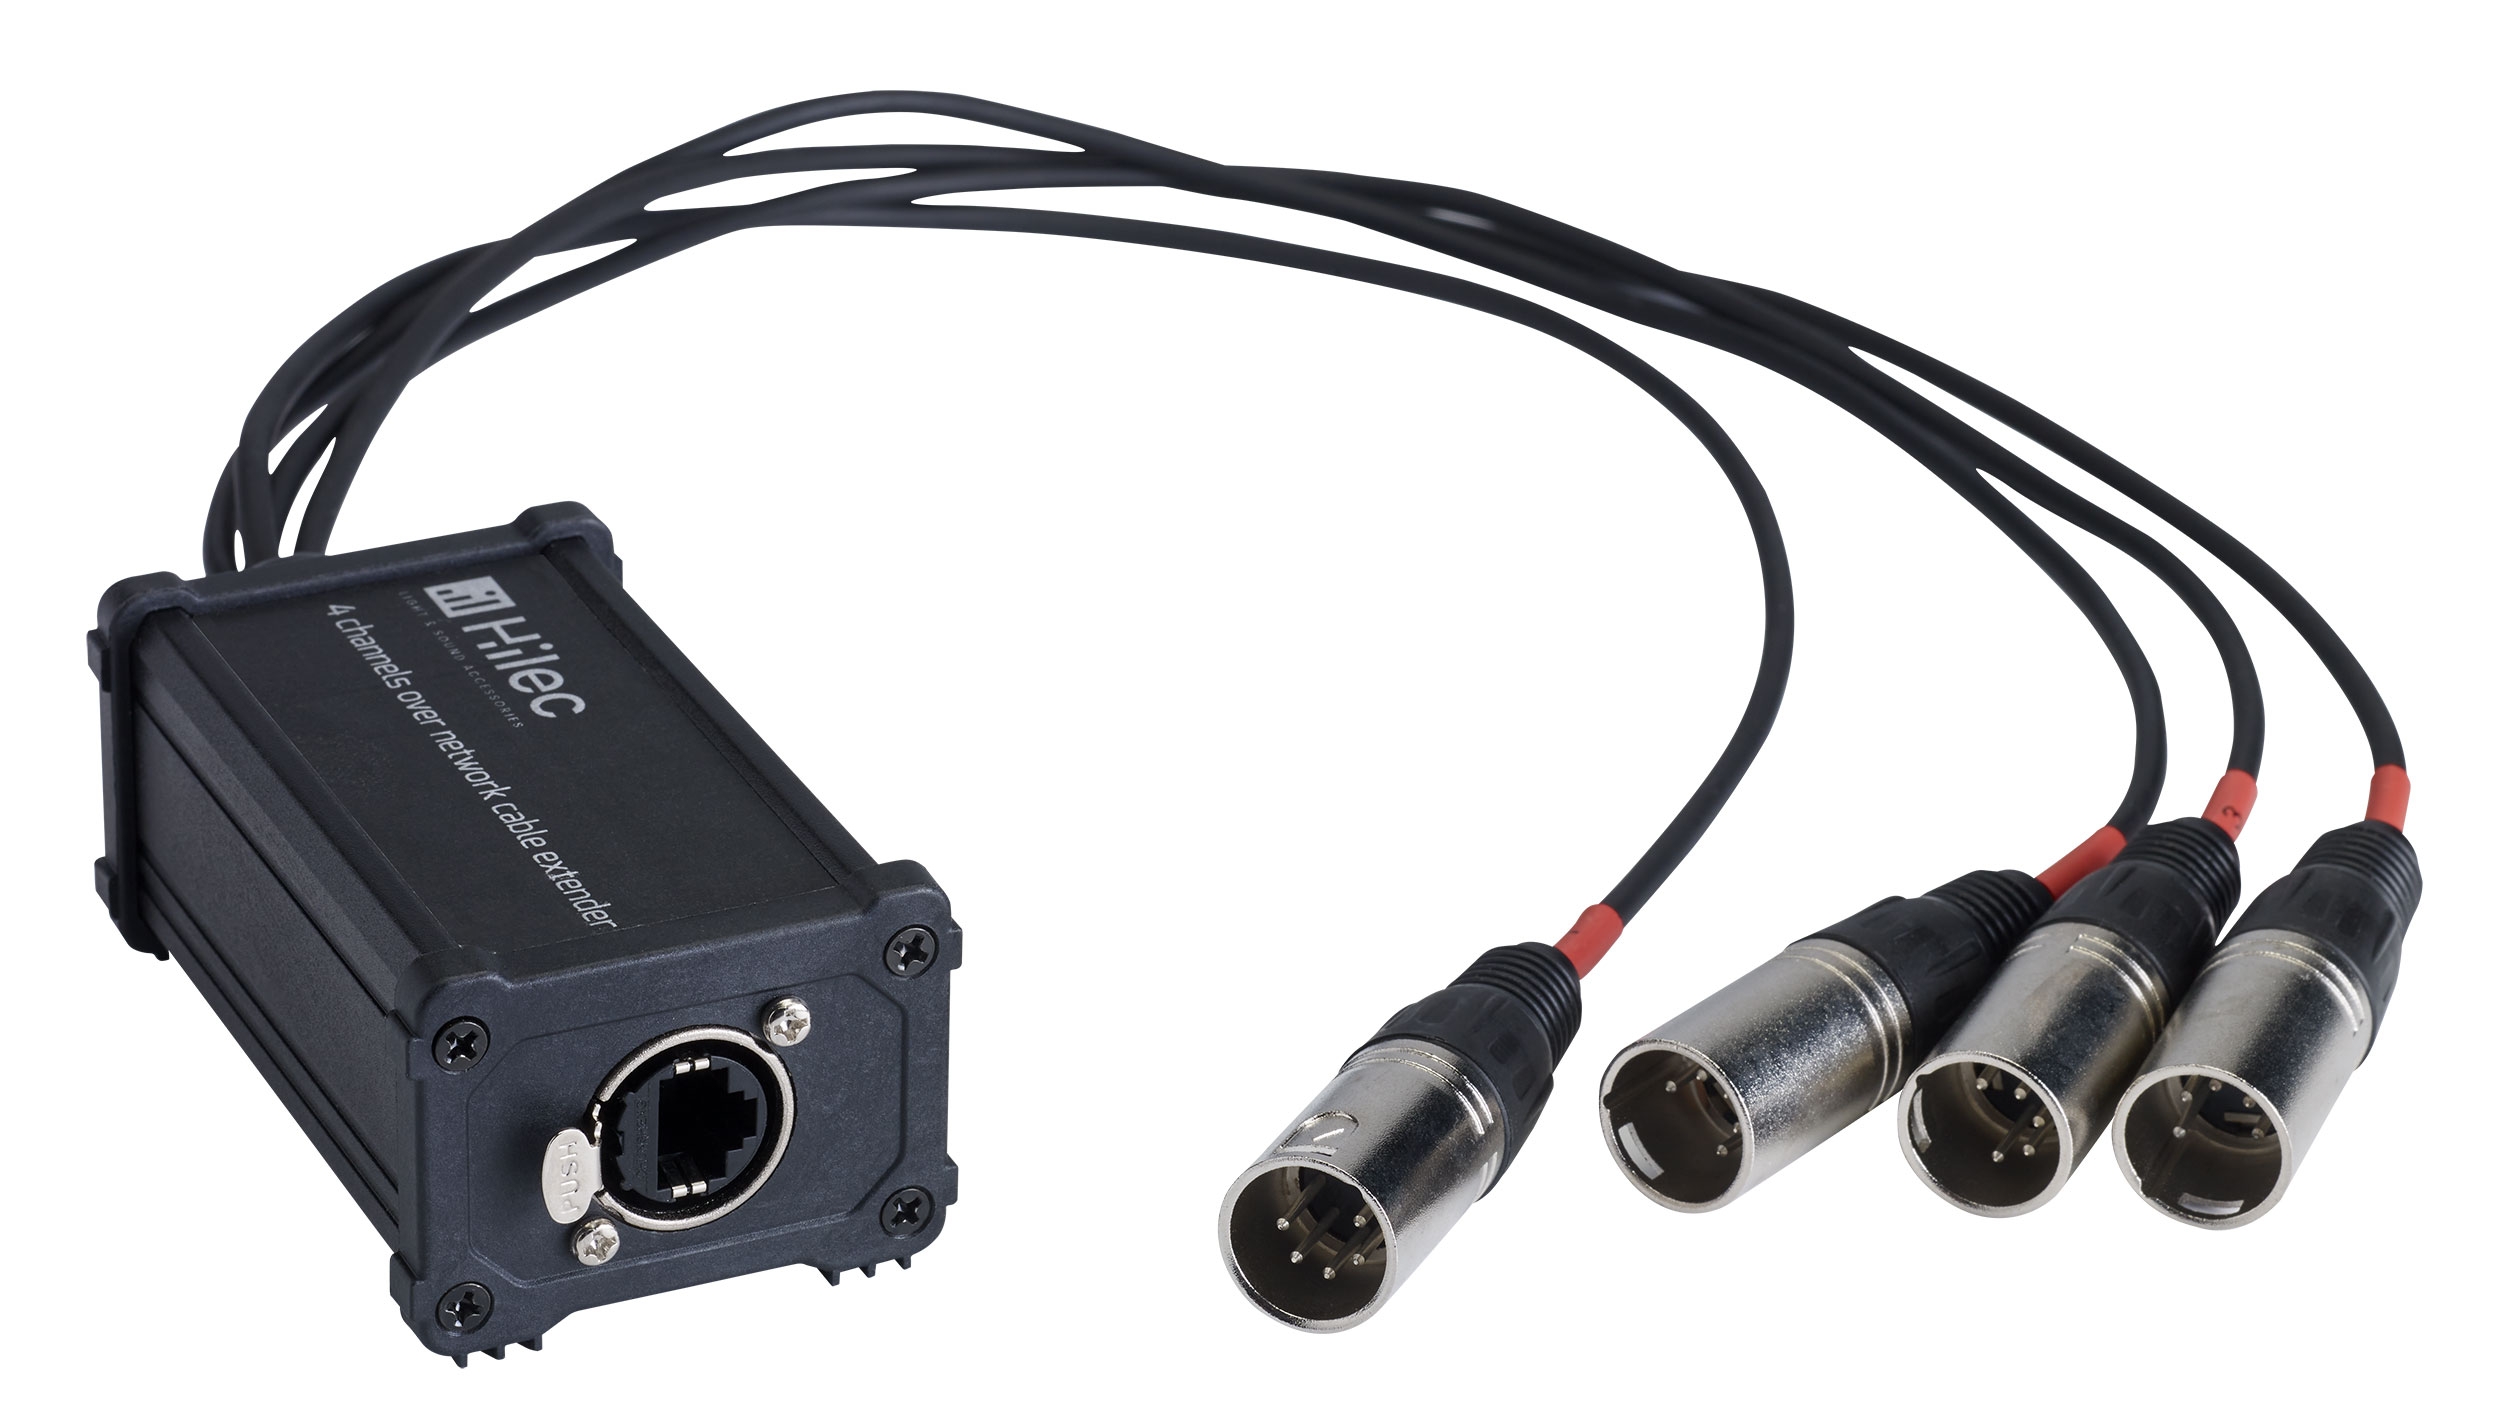 RJ45 / XLR5M adapter box for audio or DMX signal